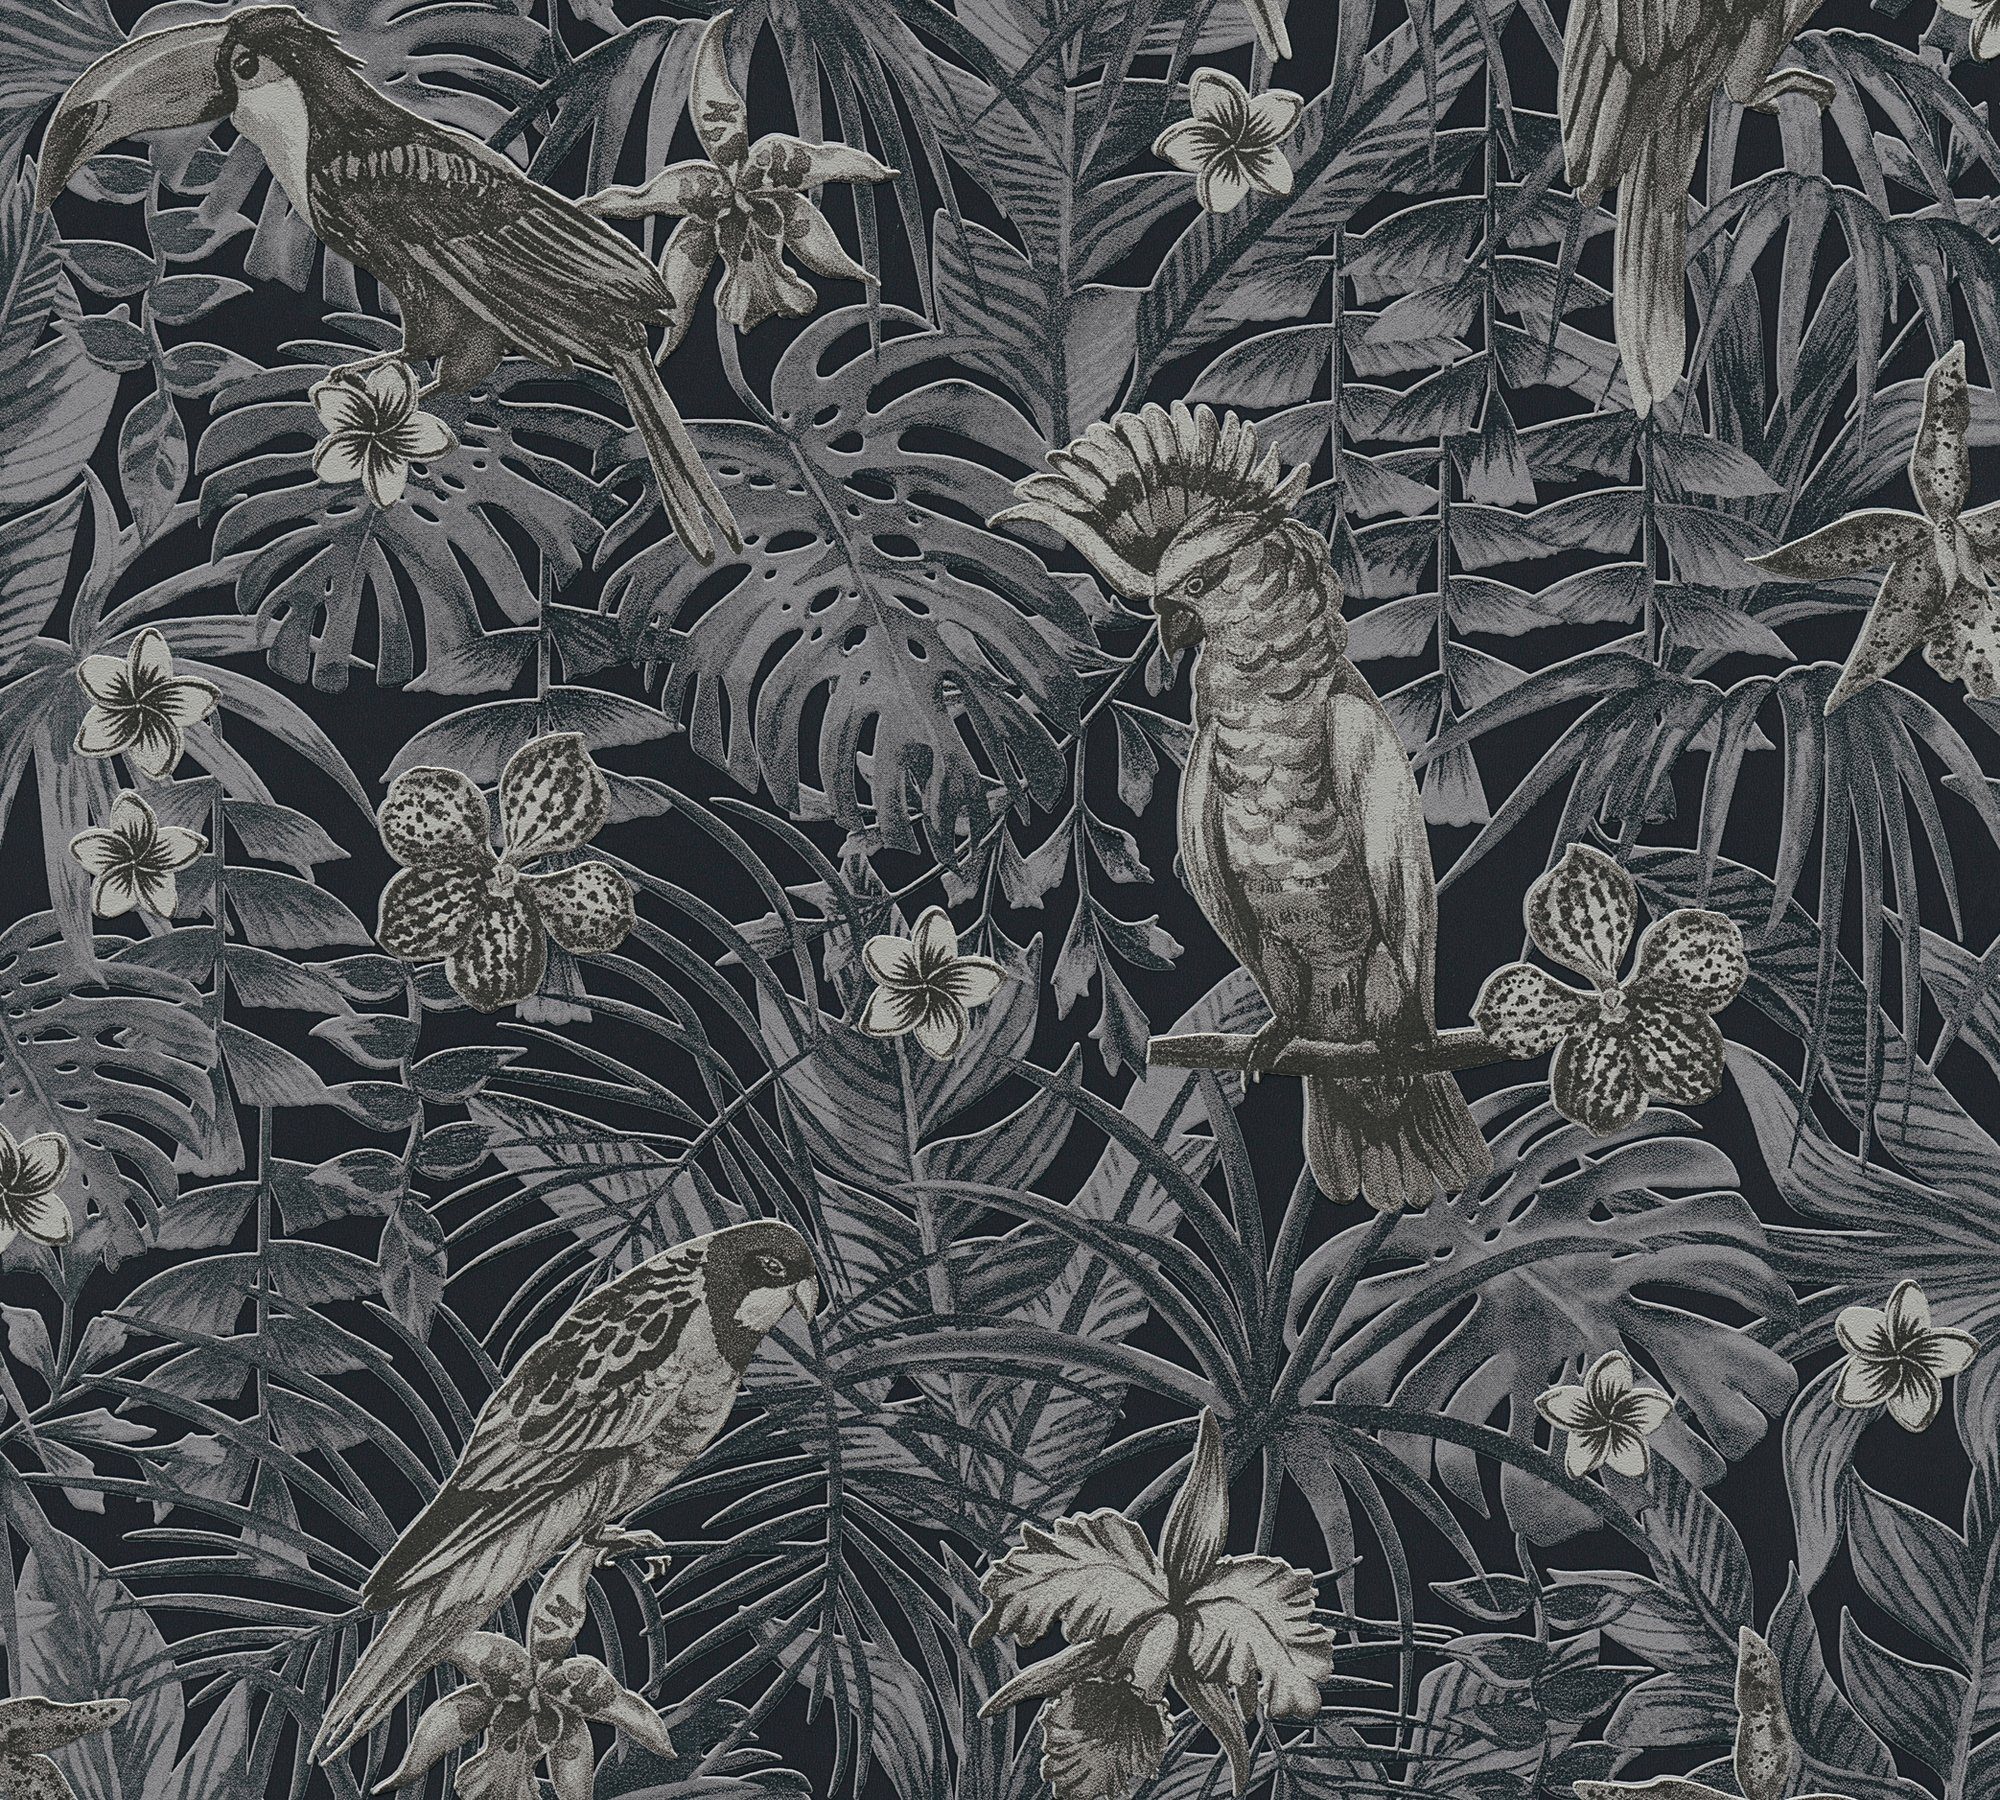 Dschungel Vliestapete Création Palmenprint in Greenery floral, Vogeltapete Optik, Dschungel Tapete strukturiert, A.S. mit schwarz